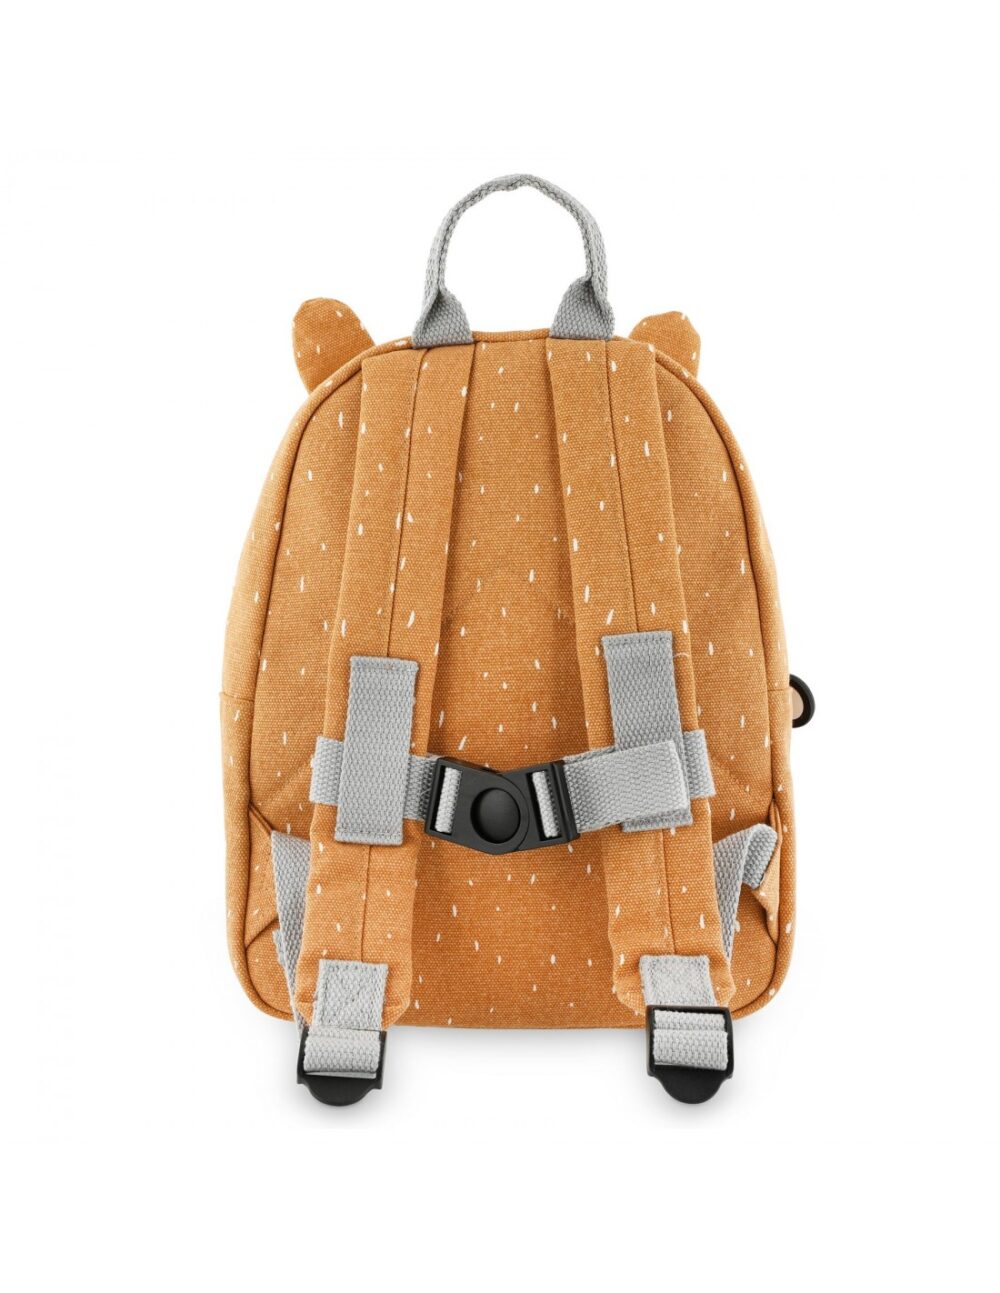 mr fox backpack 2